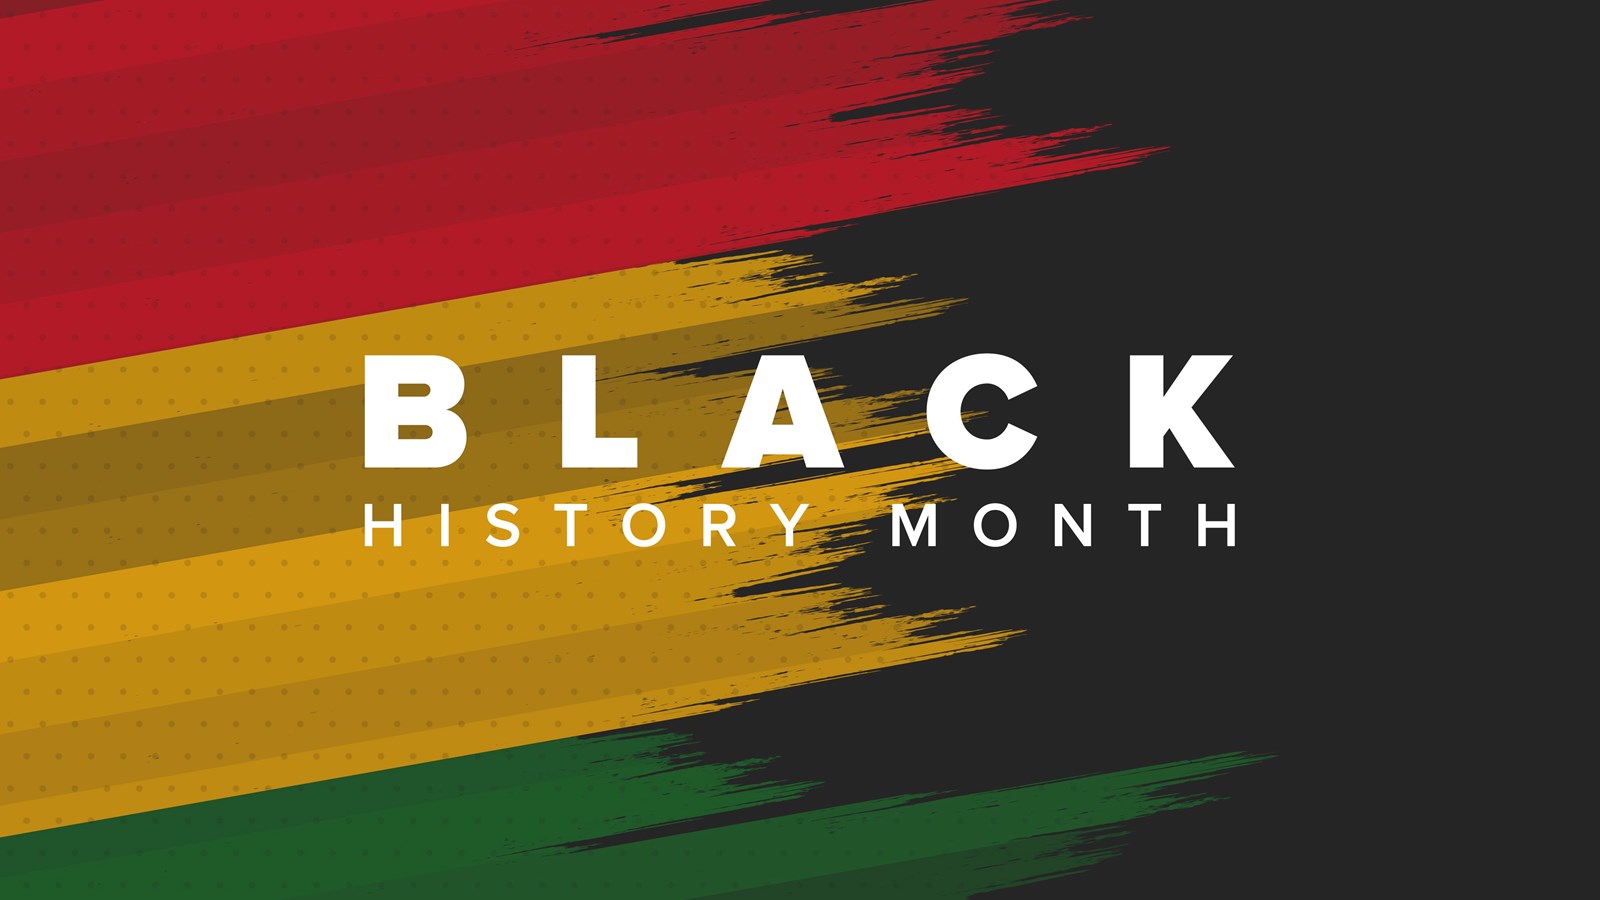 Black History Month February